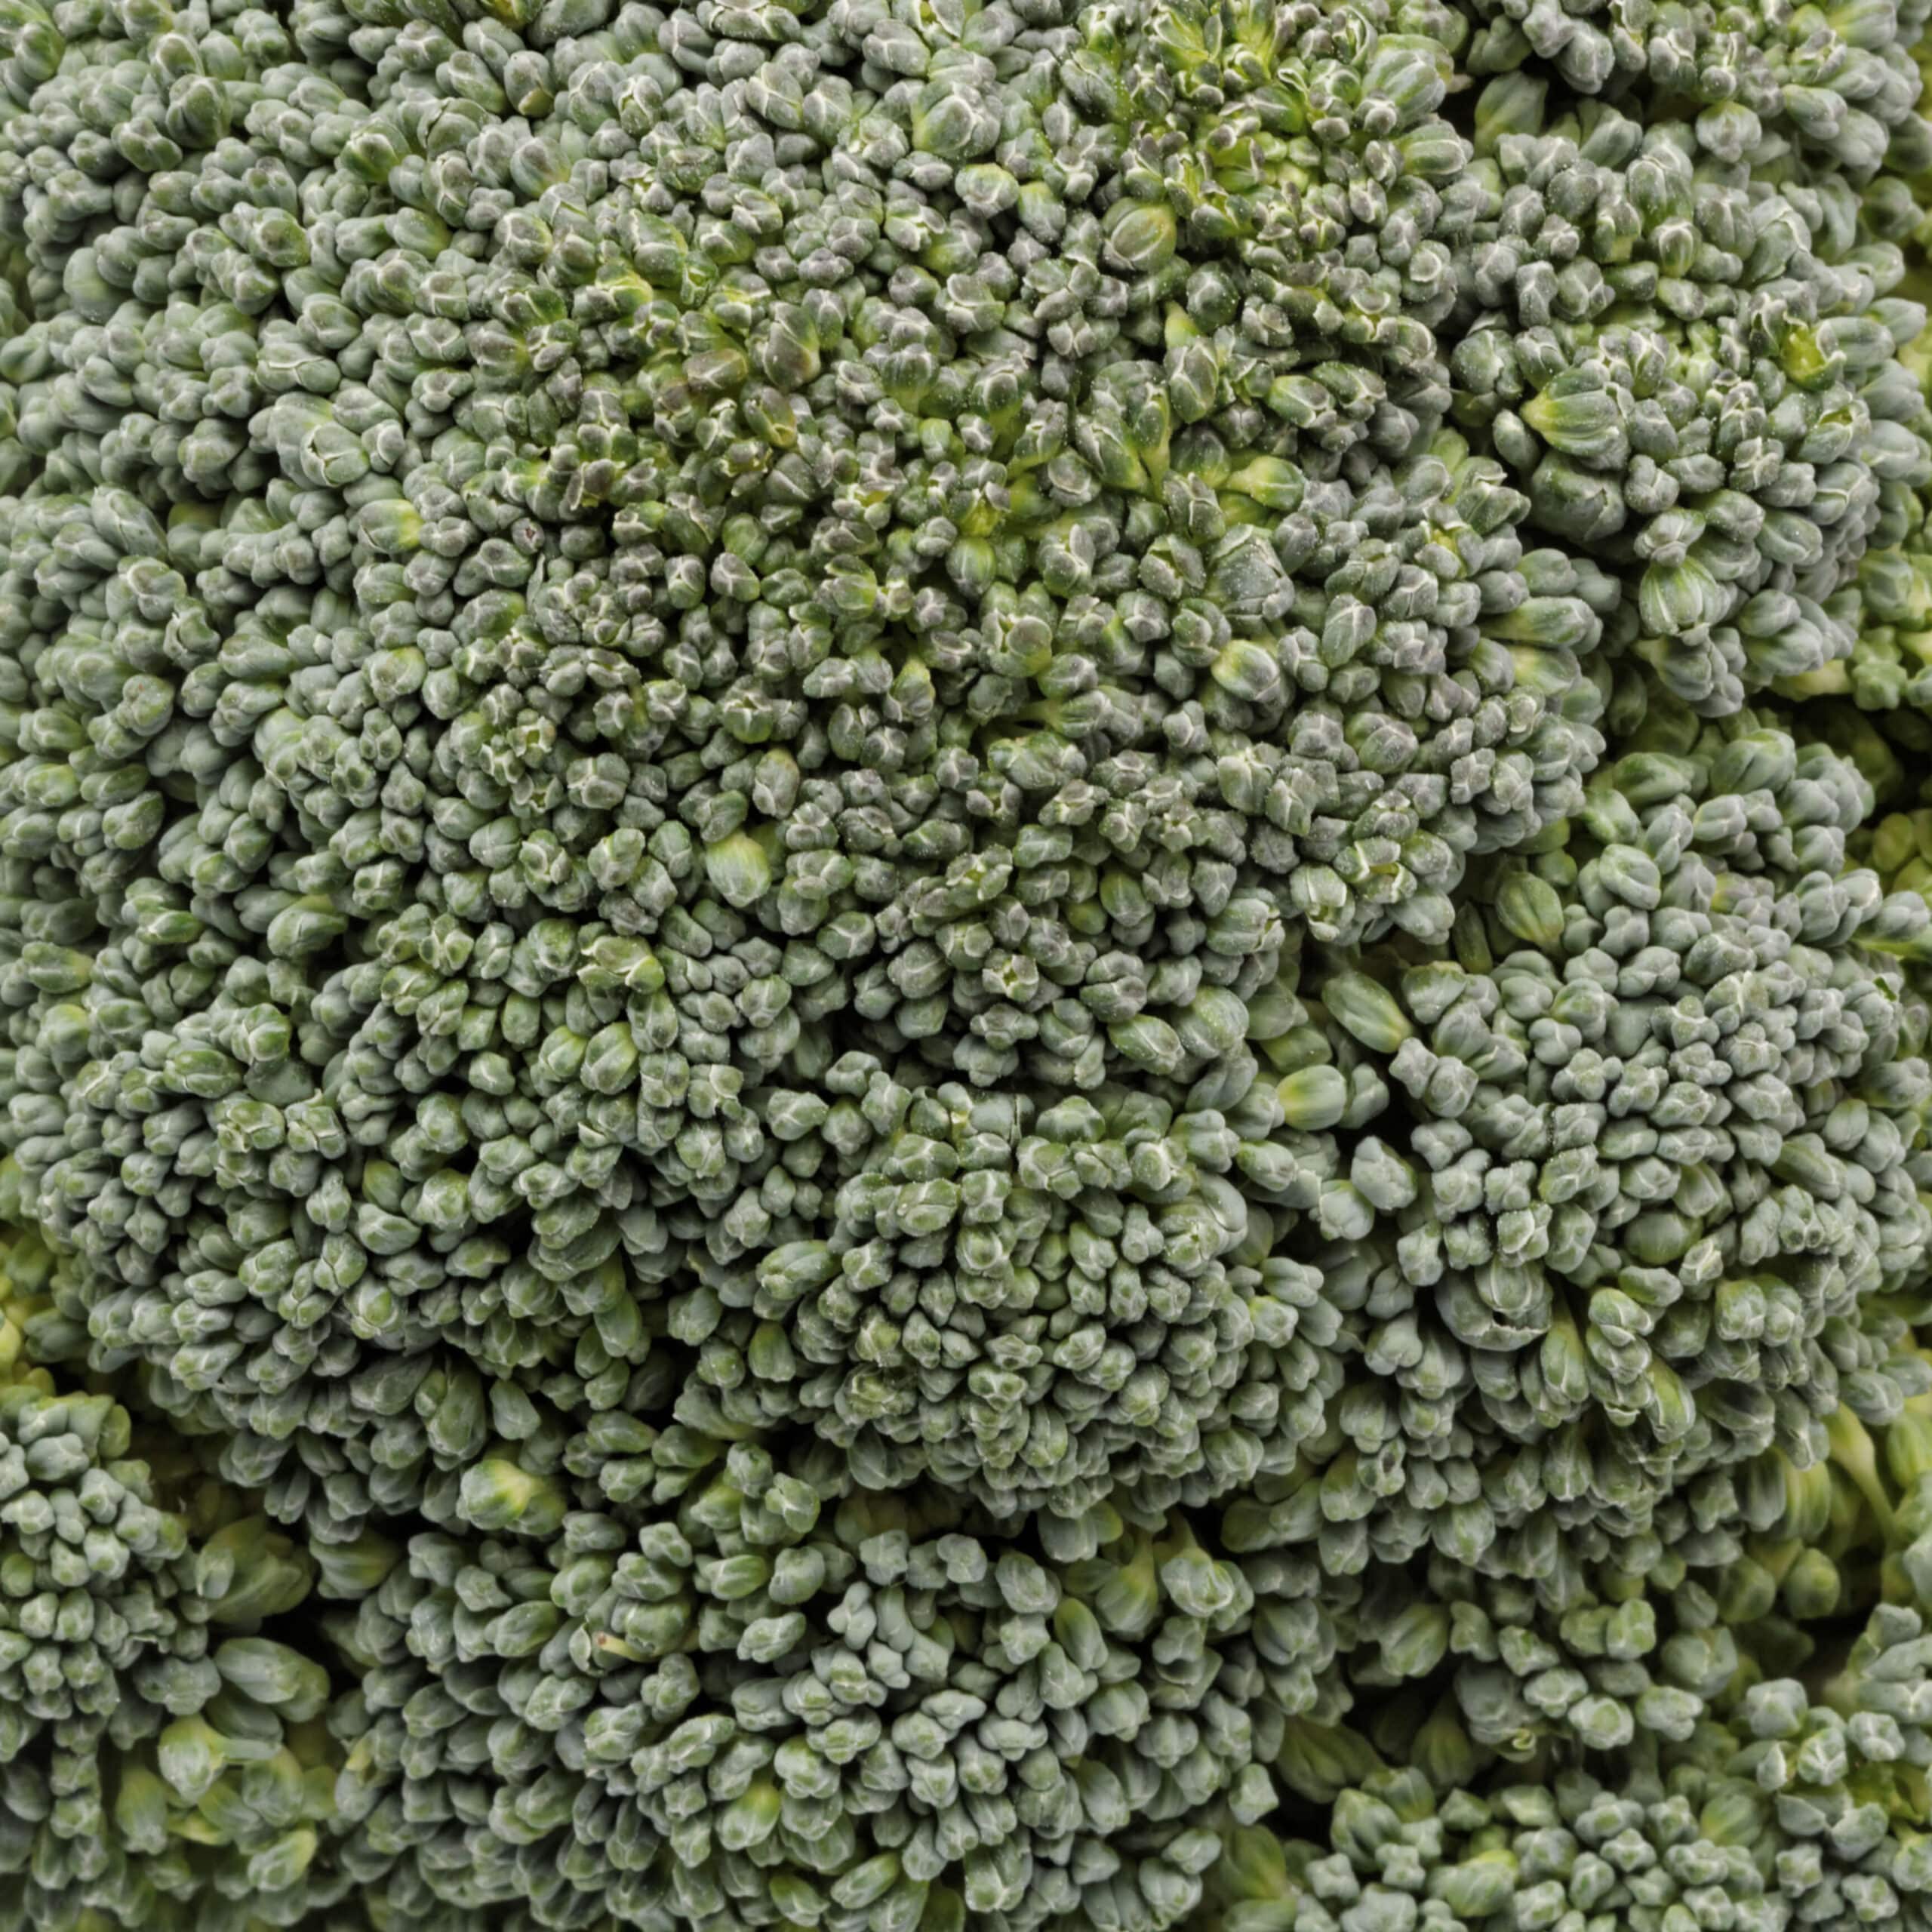 Broccoli head